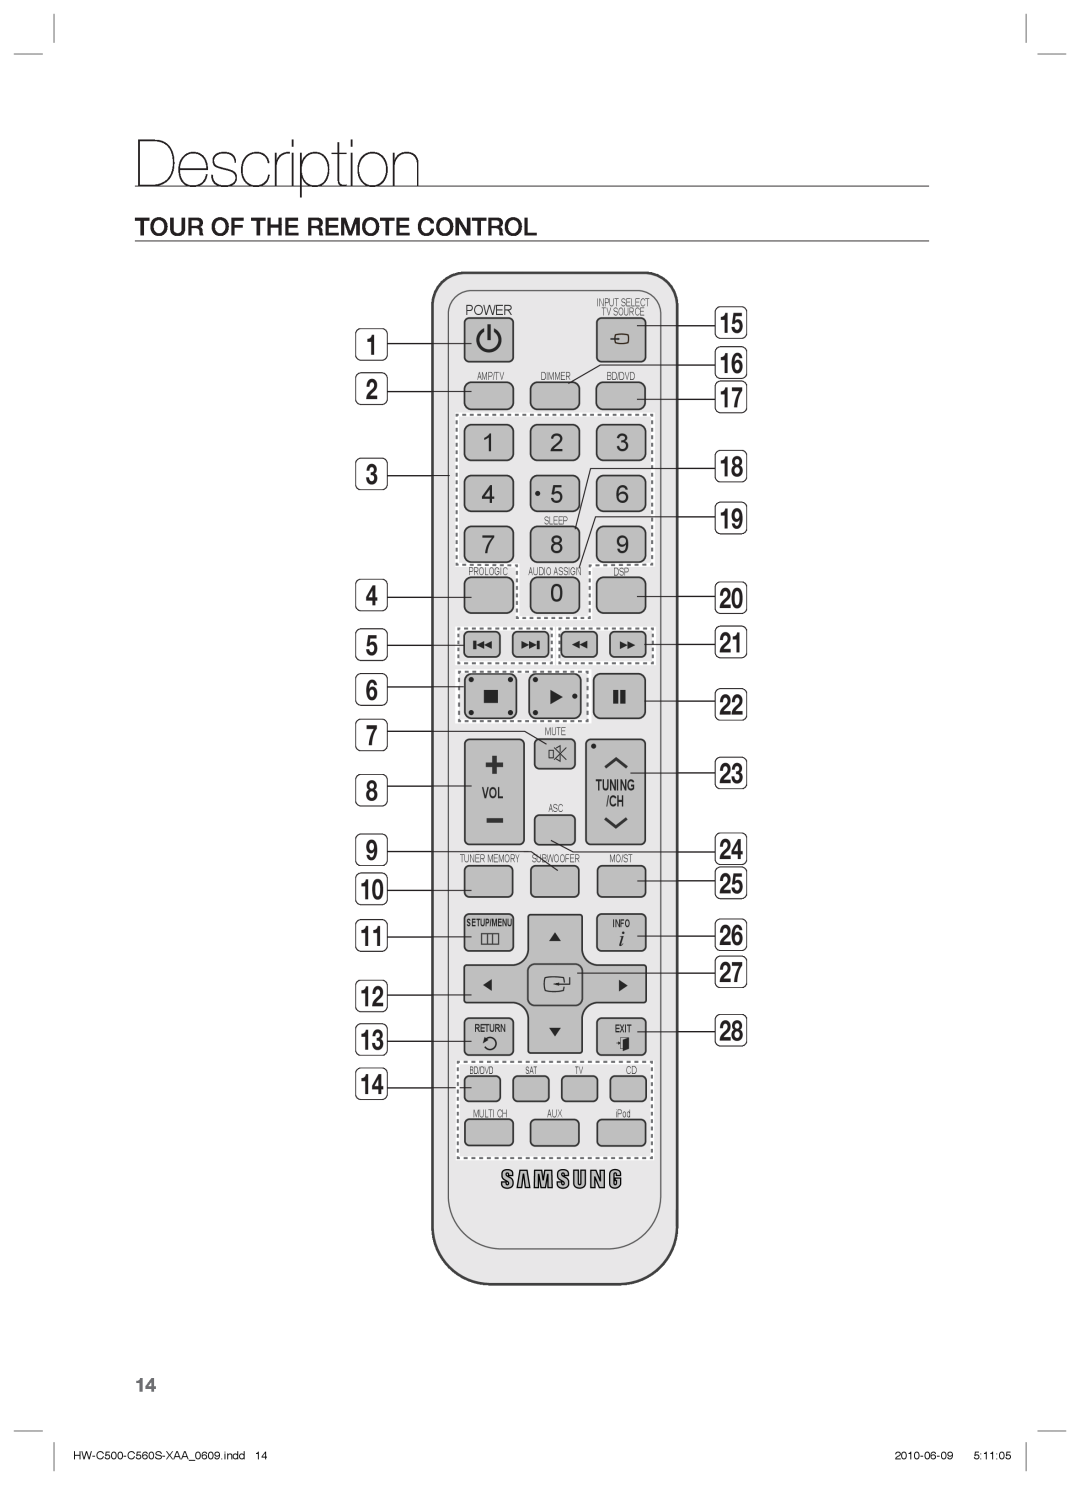 Samsung Tour Of The Remote Control, Description, 1 2 3 4 5 6 7 8 9 10, HW-C500-C560S-XAA 0609.indd14, 2010-06-09 5 